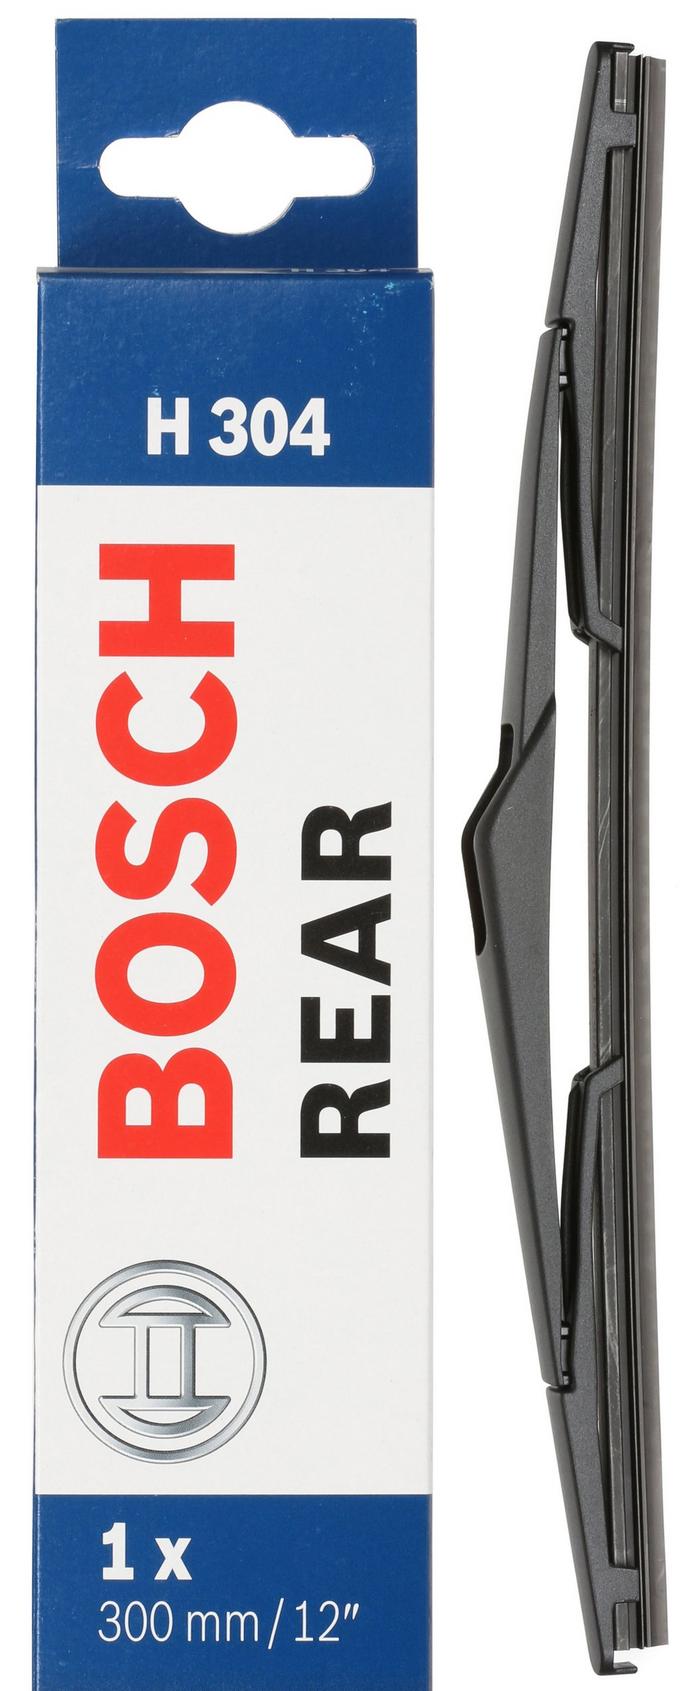 Bosch H304 Wiper Blade - Single | Halfords UK